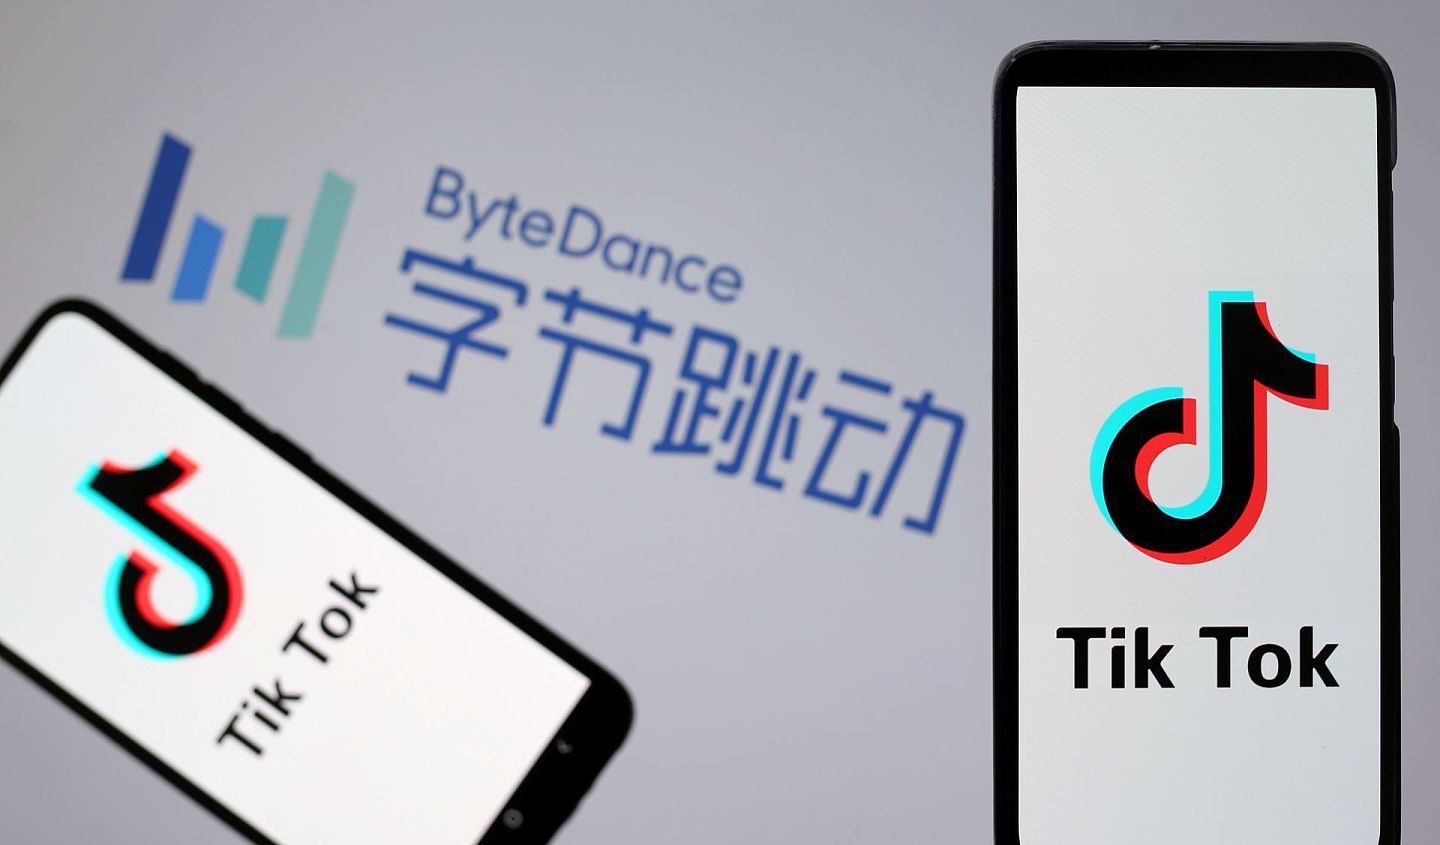 TikTok为字节跳动所拥有，是抖音的海外版。字节跳动强调TikTok管理与抖音不同，未曾与中国政府分享任何讯息。图为路透社资料图片。（Reuters）